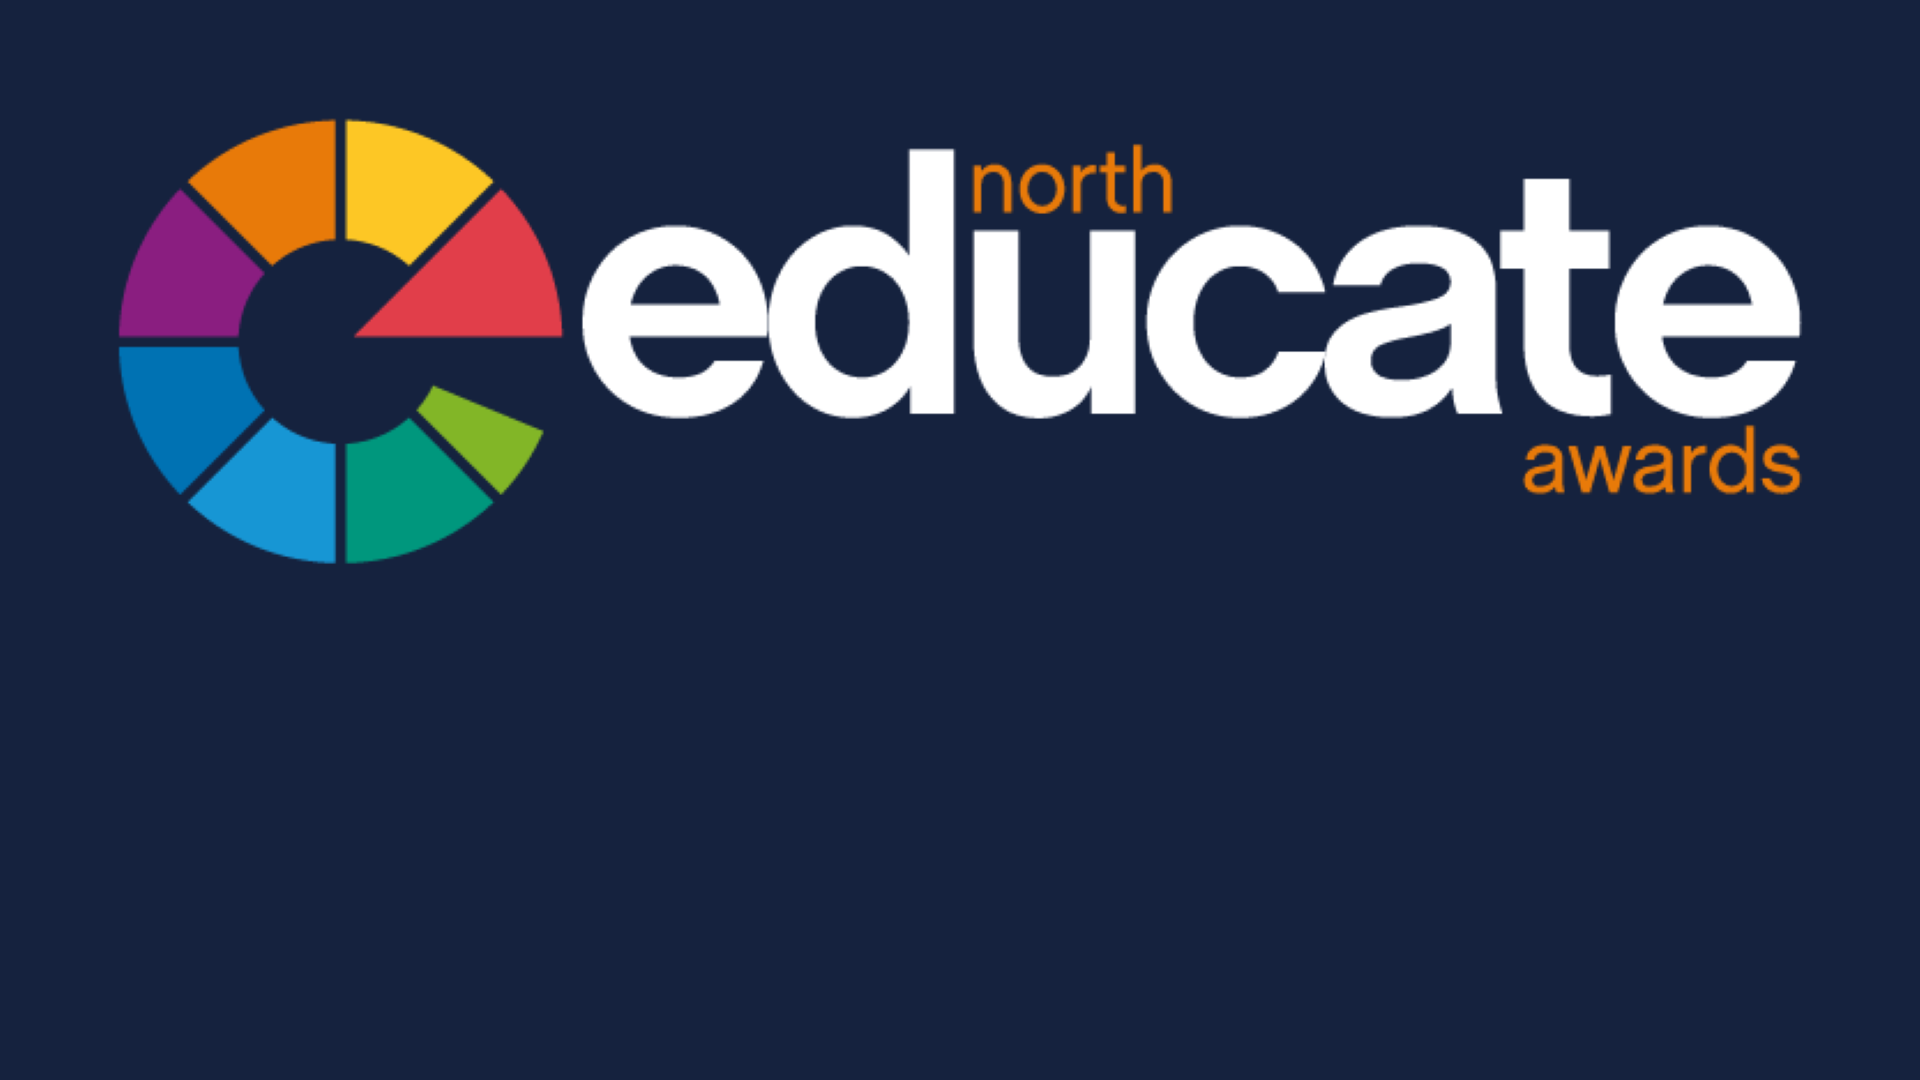 Educate North Awards logo